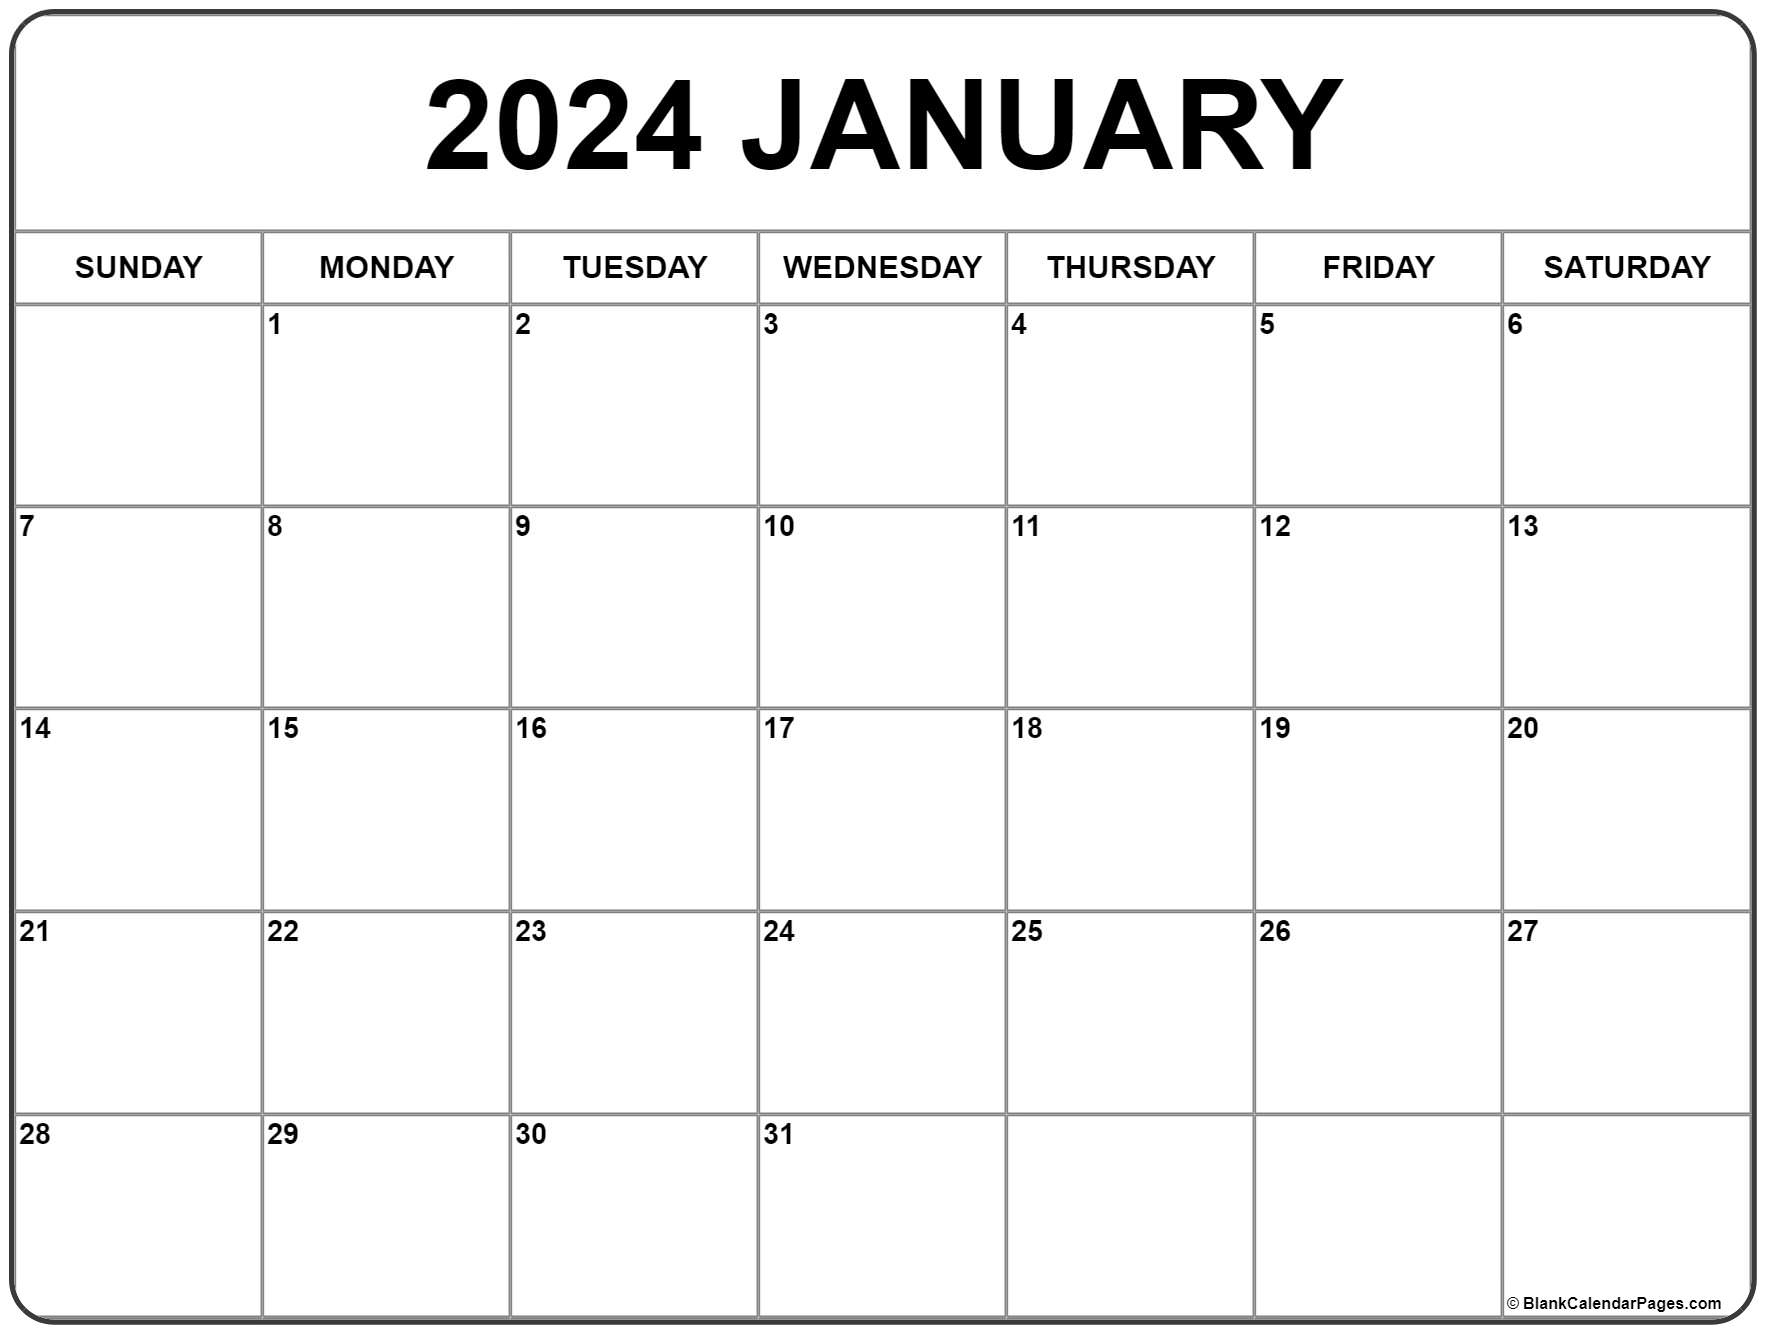 January 2024 Calendar | Free Printable Calendar with Free Printable Calendar 2024 January